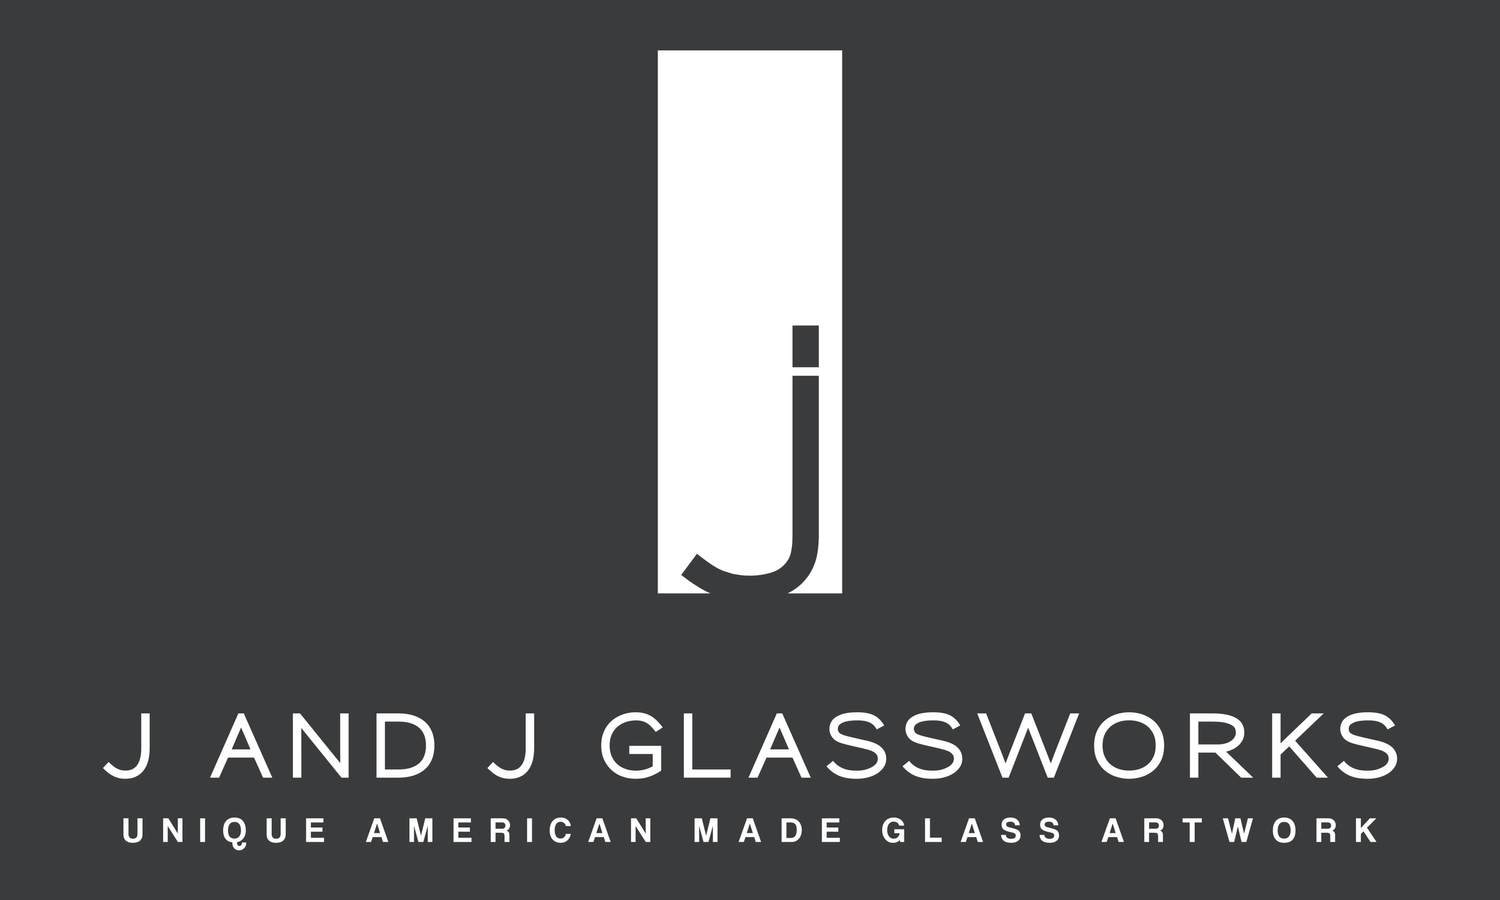 J and J Glassworks